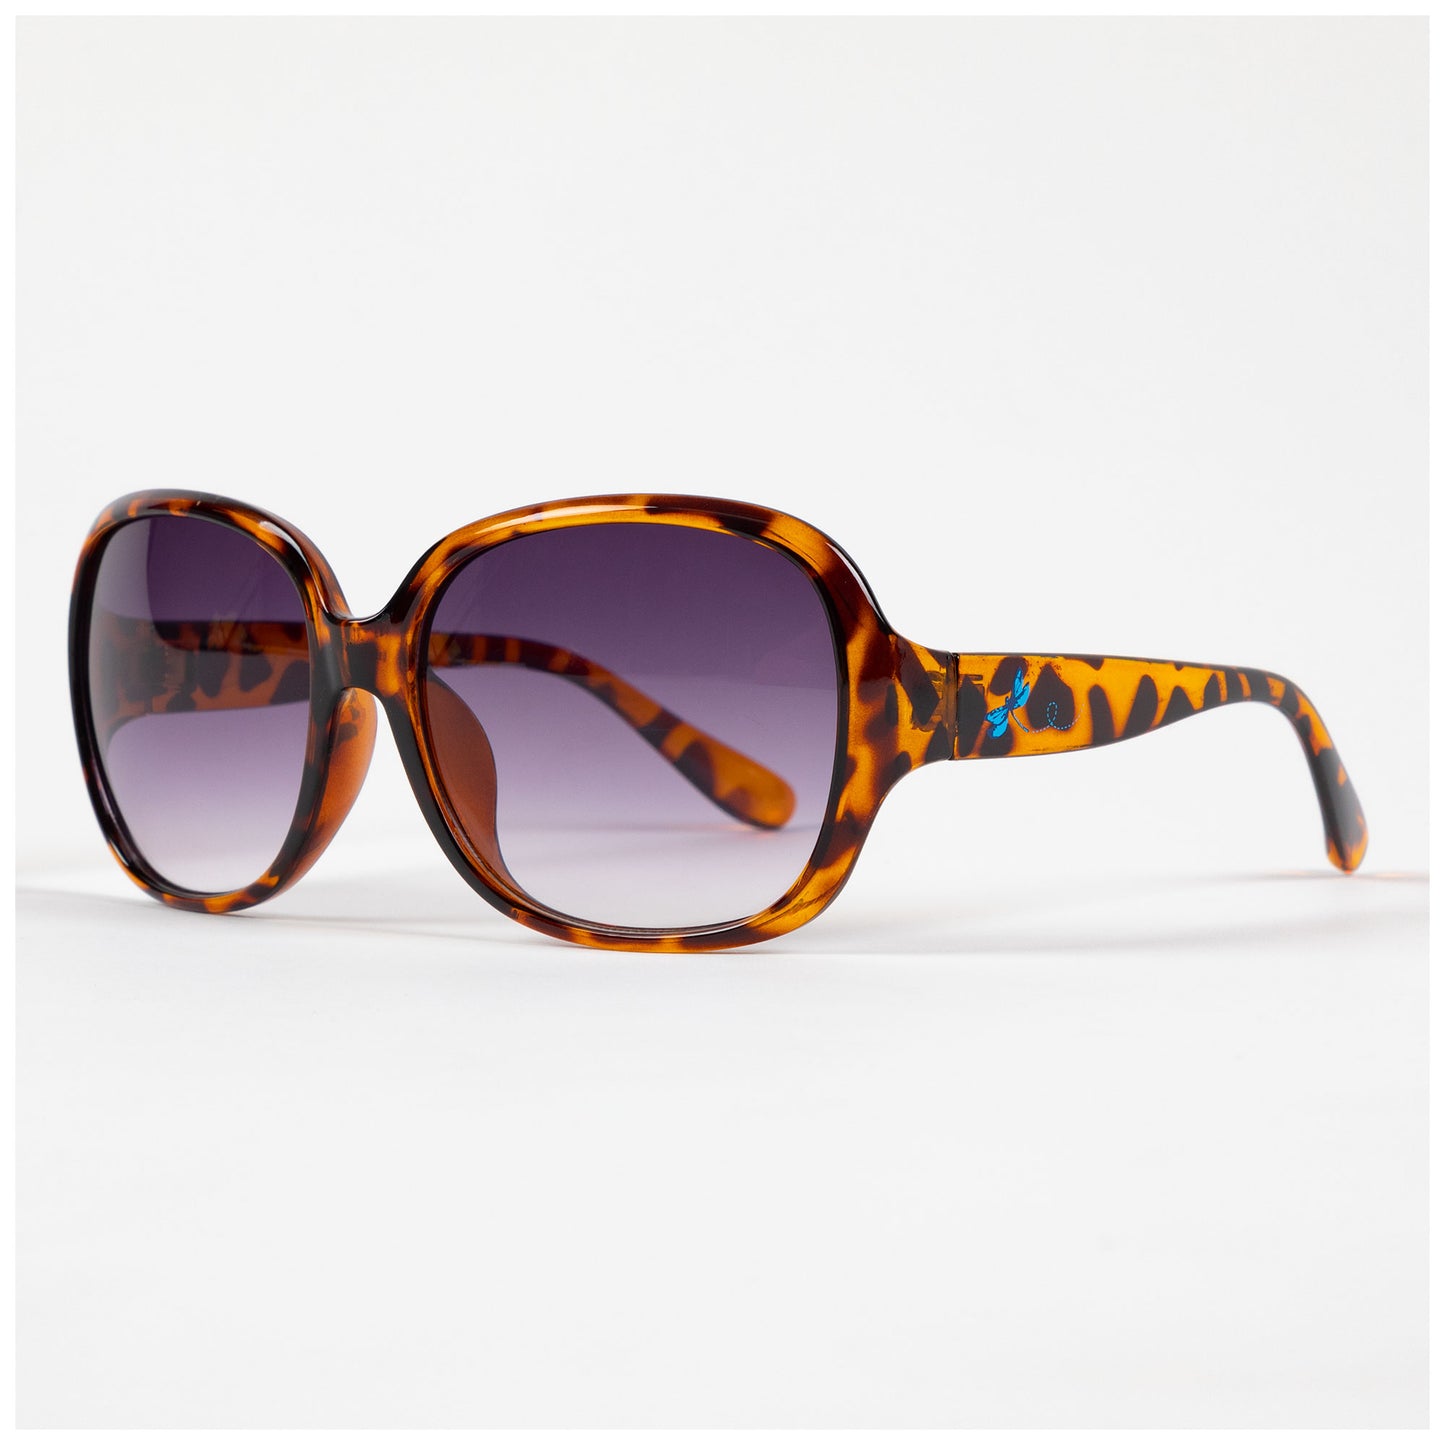 Dragonfly Summer Sunglasses!